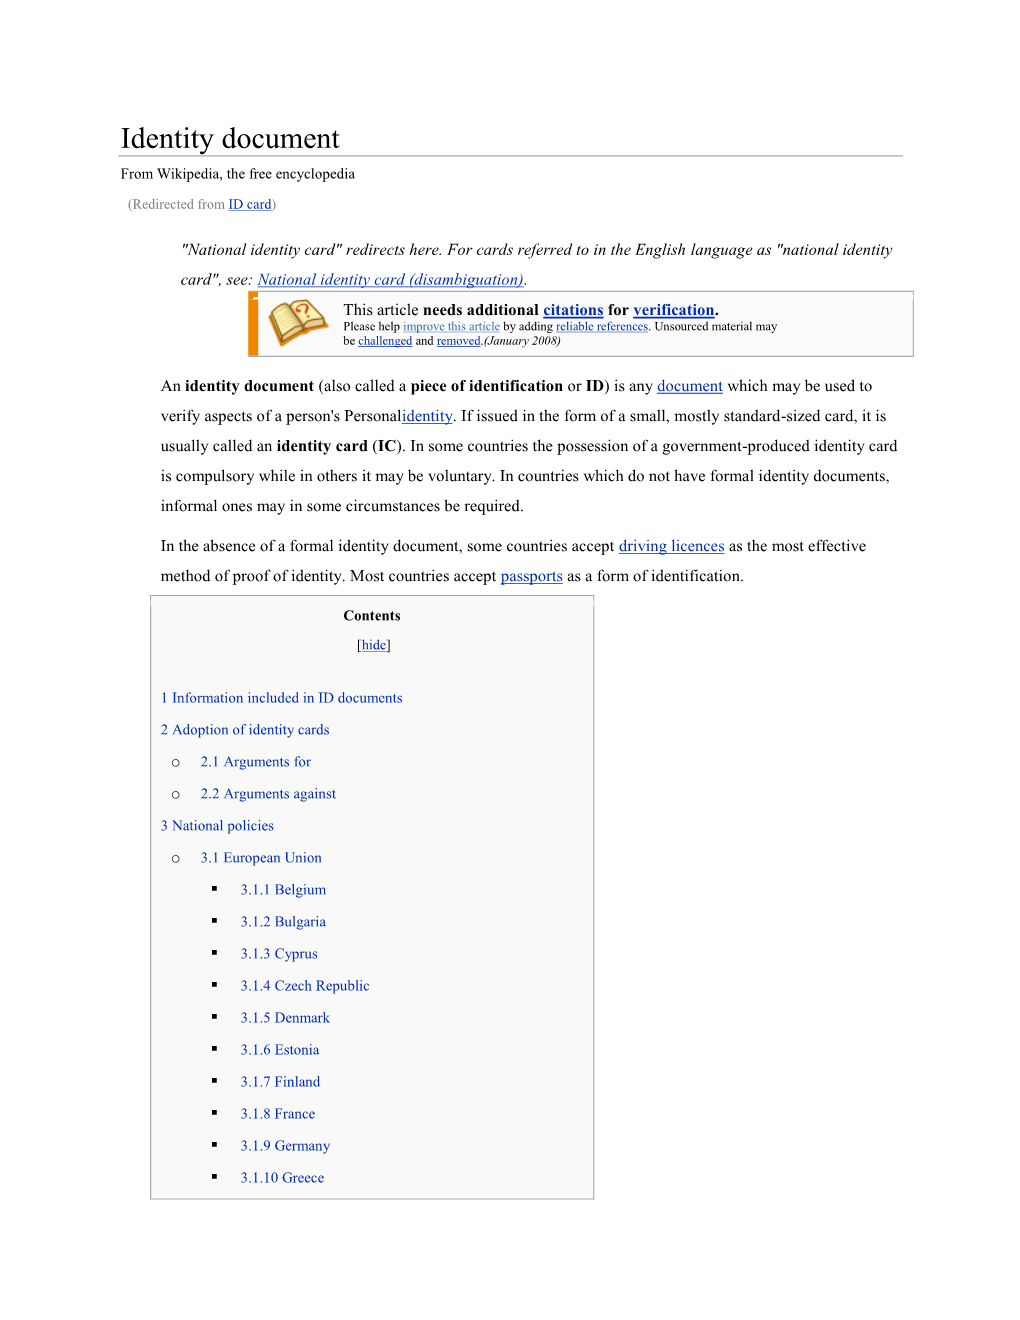 Identity Document from Wikipedia, the Free Encyclopedia